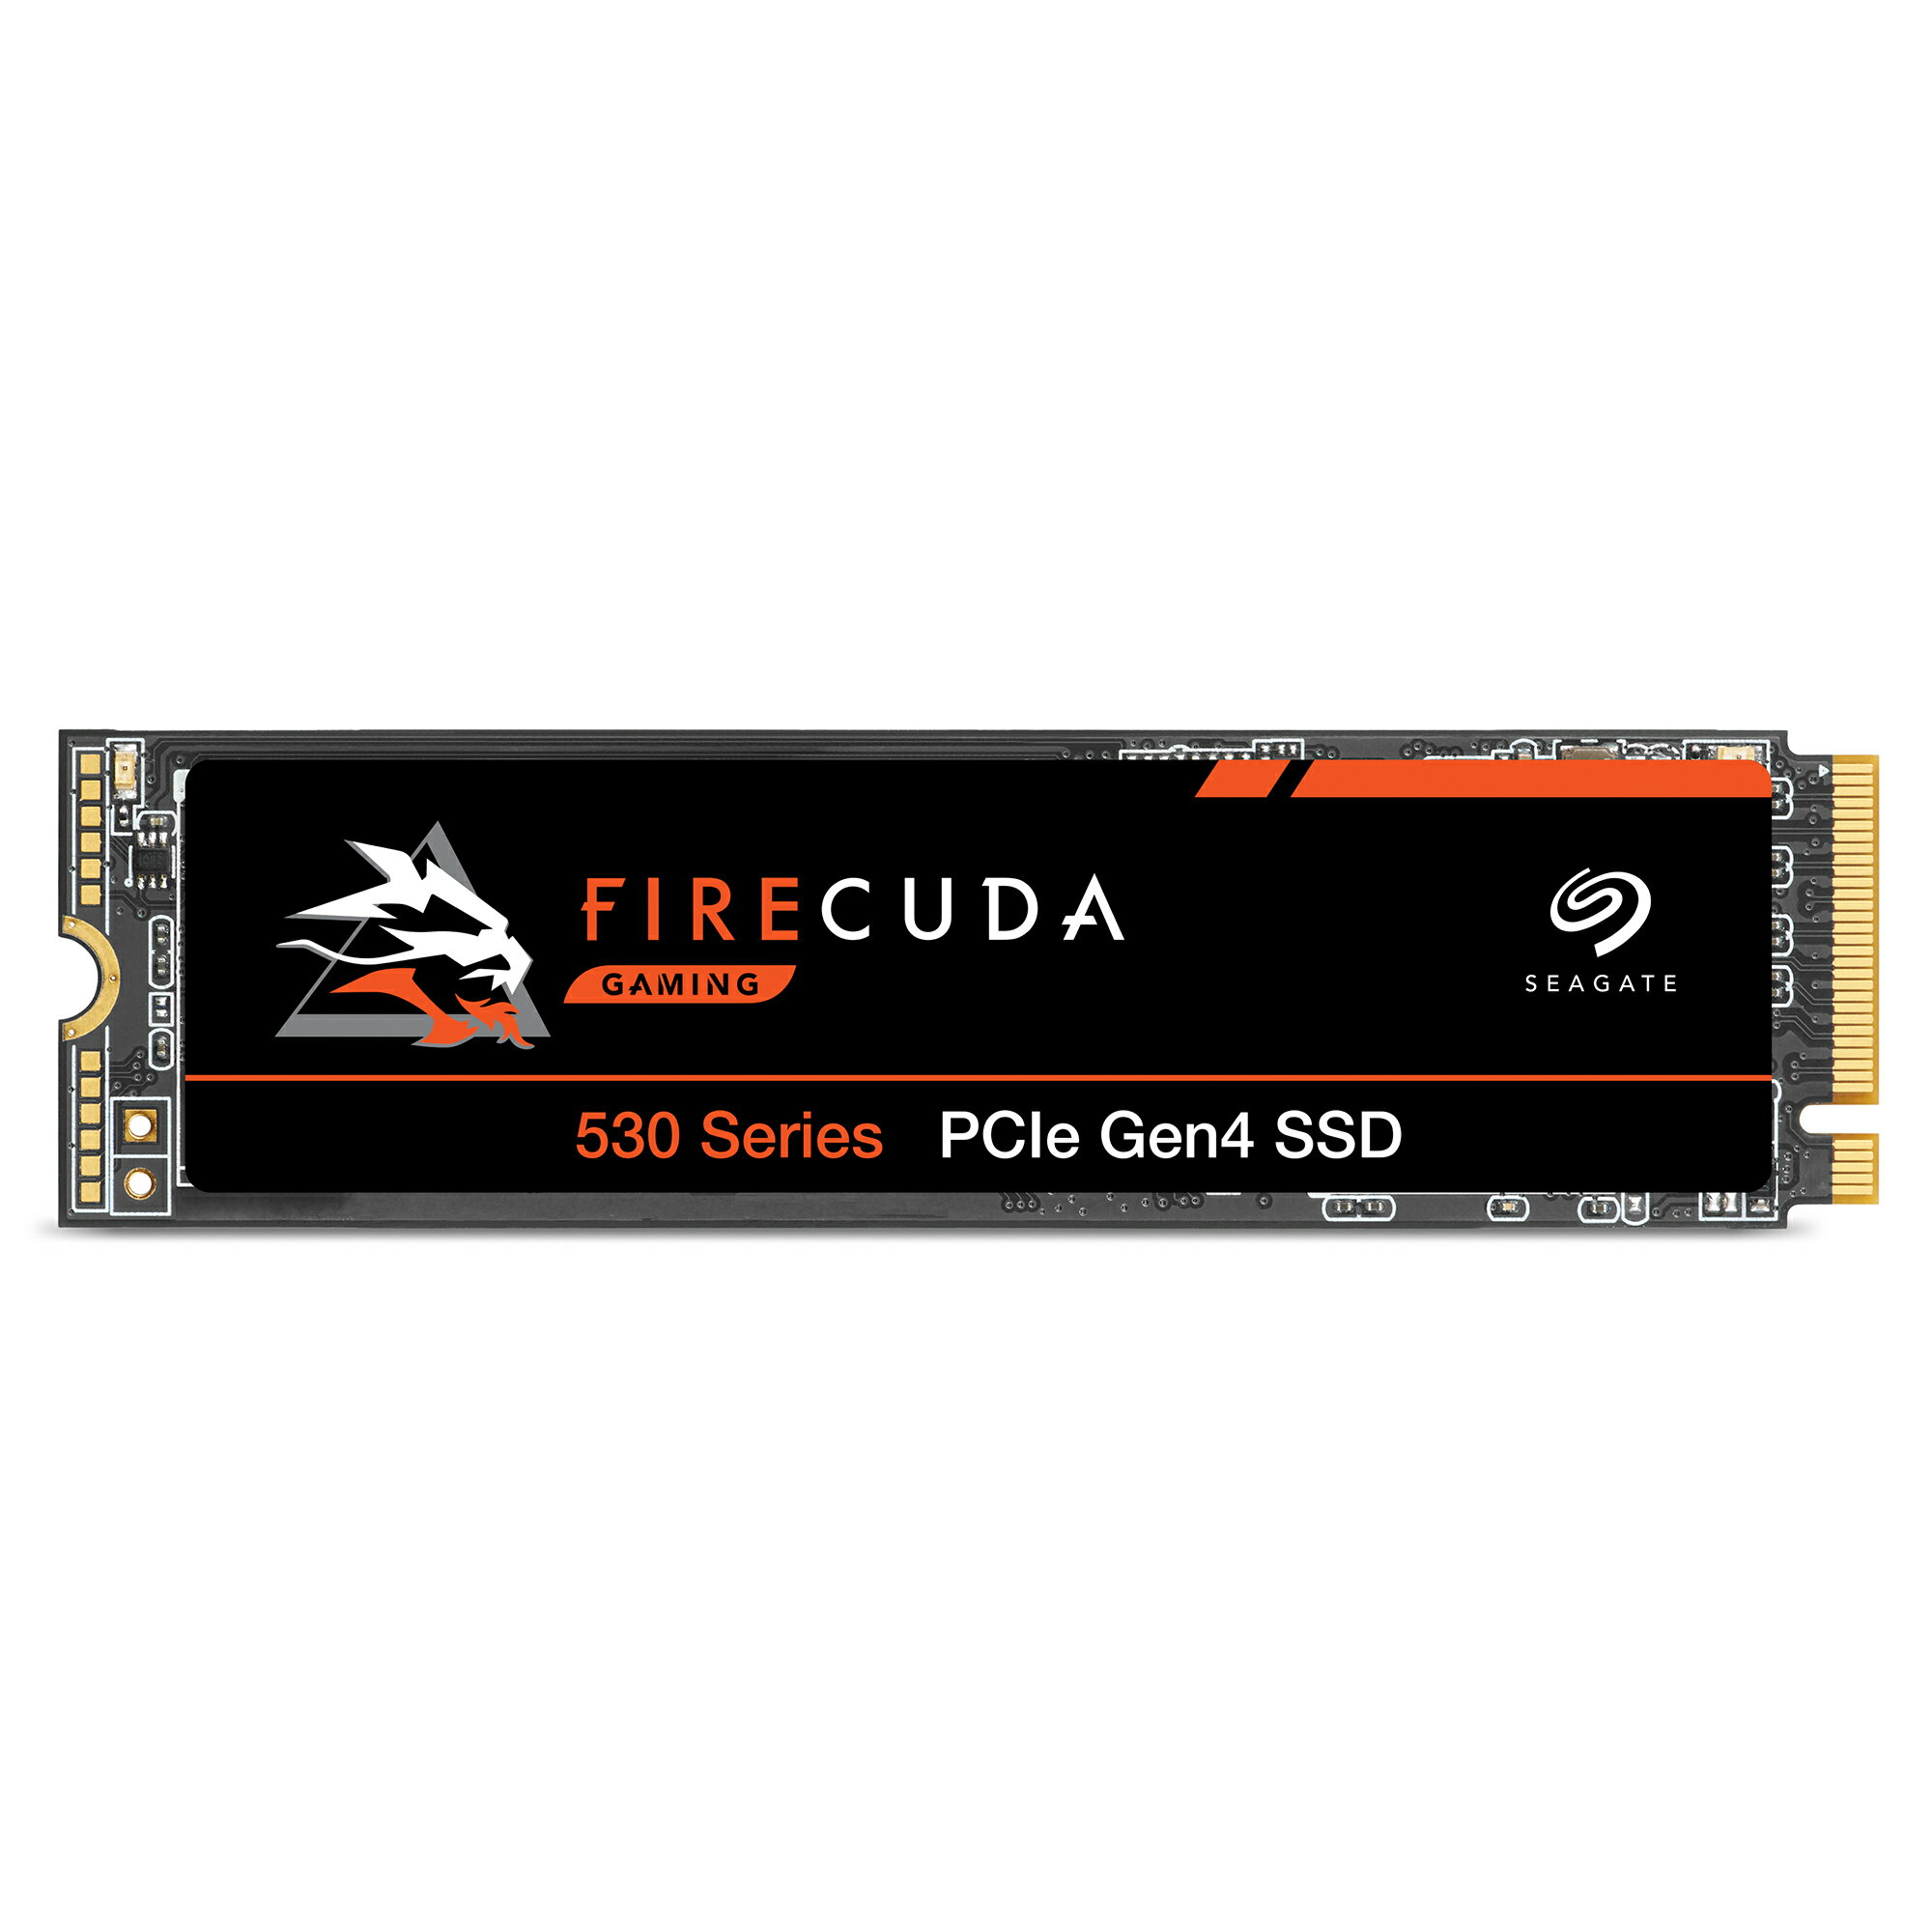 Seagate シーゲイト FireCuda 530 M.2 内蔵 SSD 【PS5 動作確認済み】 2TB PCIe Gen4 x4 読取速度 7300MB/s 5年保証 …